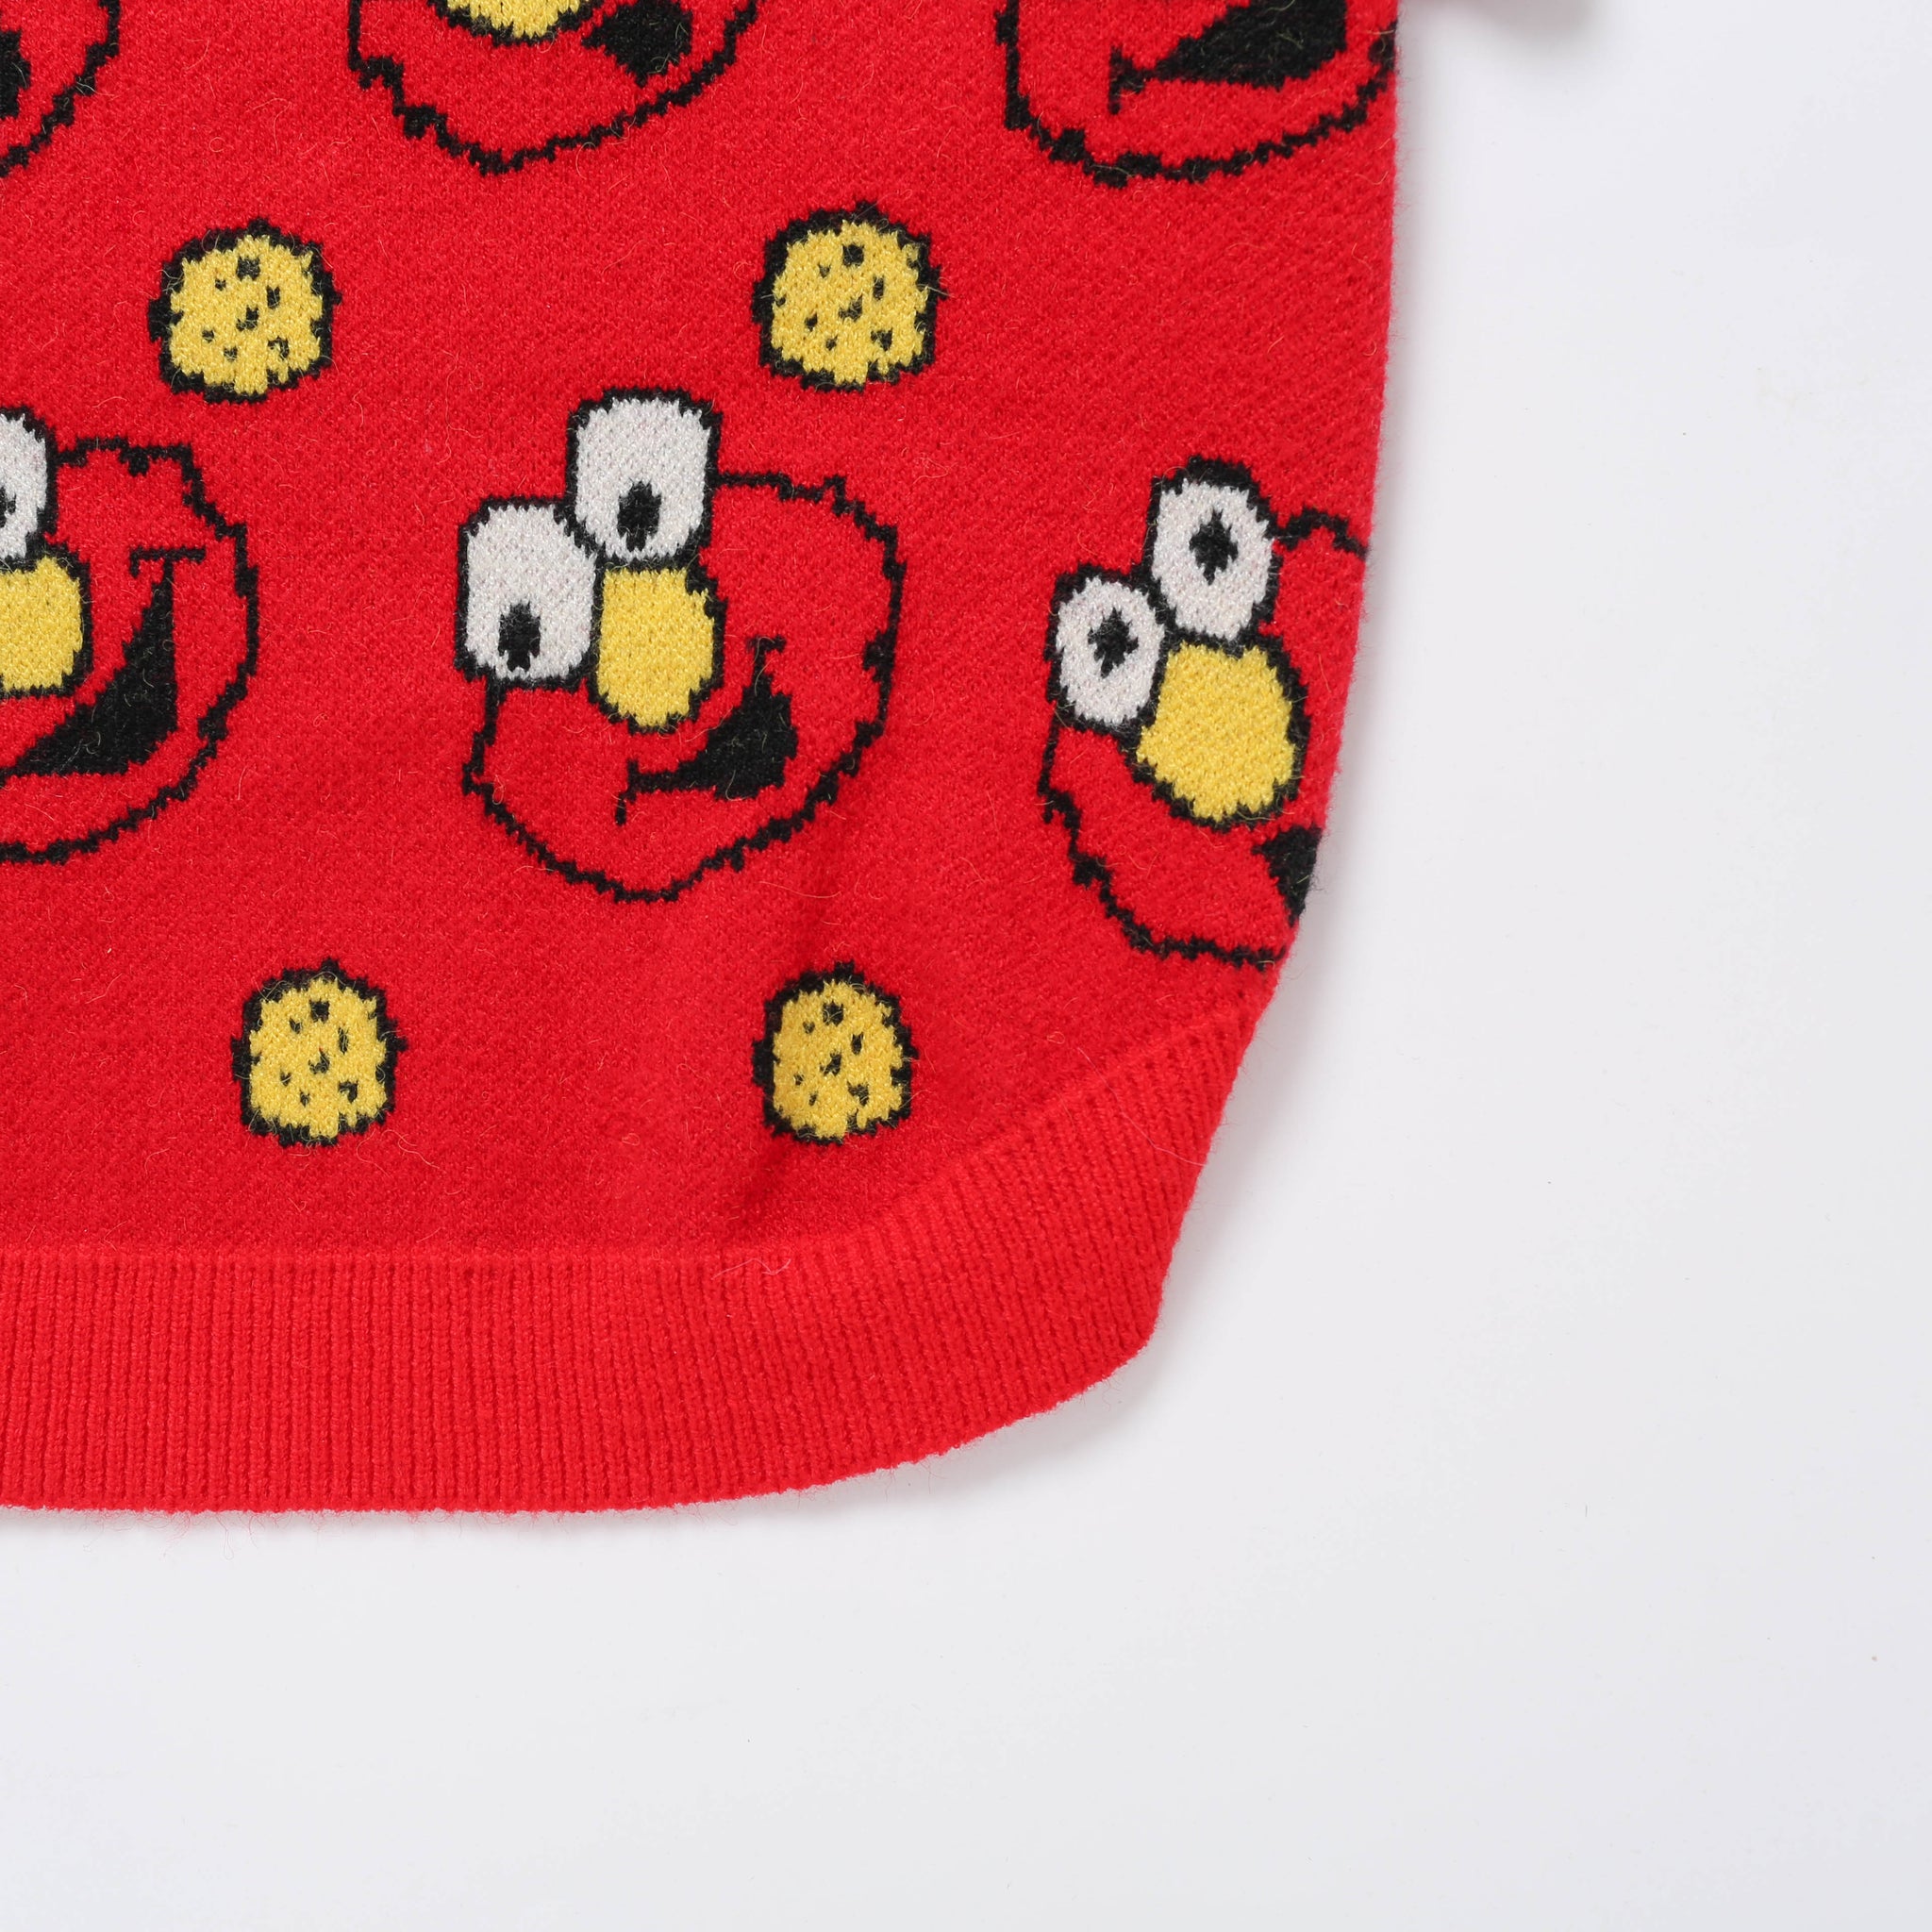 'Elmo' Sweater For small - medium pets